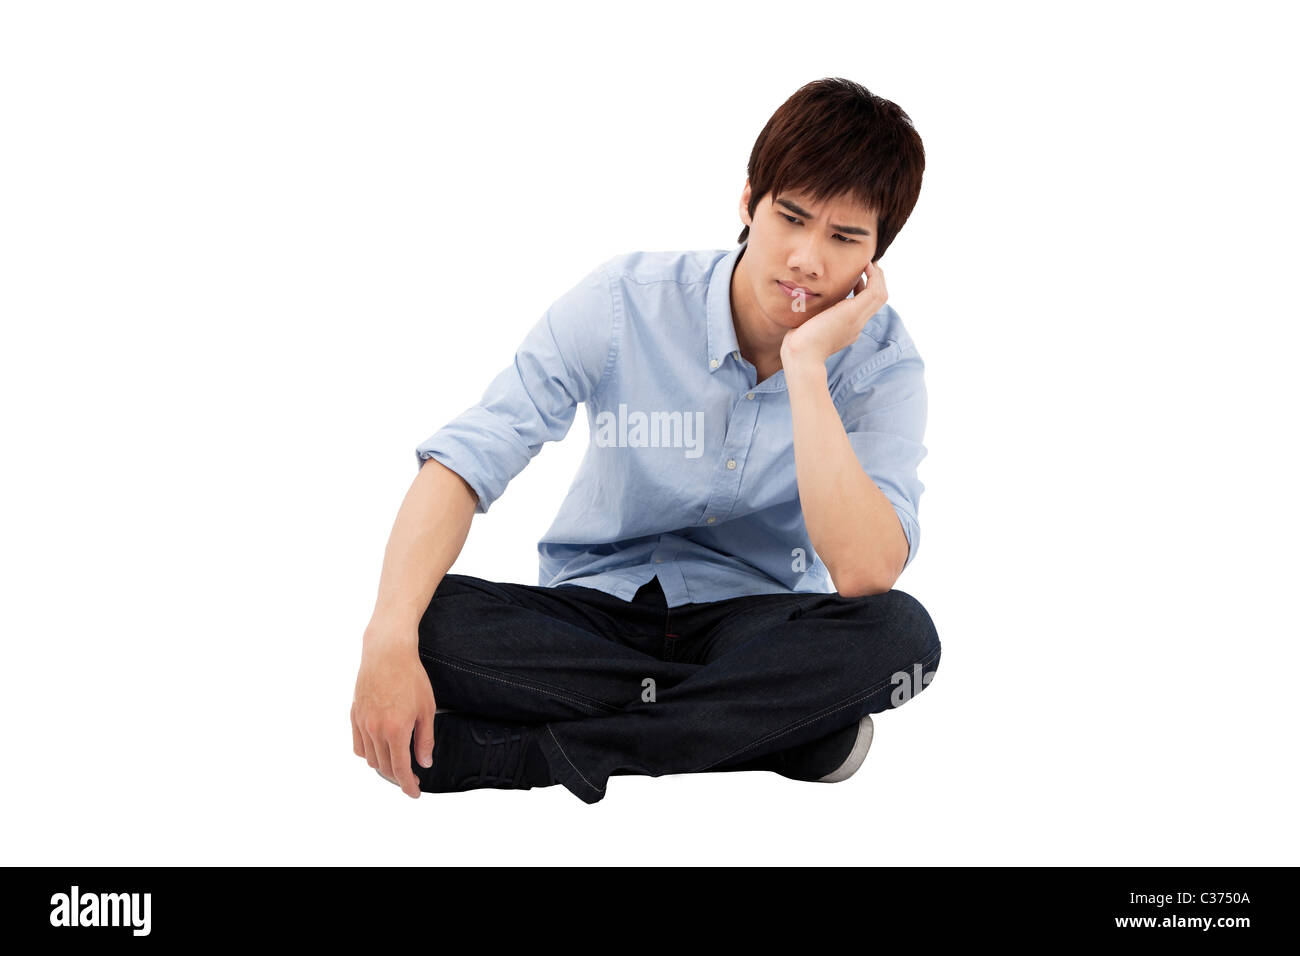 jungen Mann auf dem Boden sitzend verärgert Stockfoto